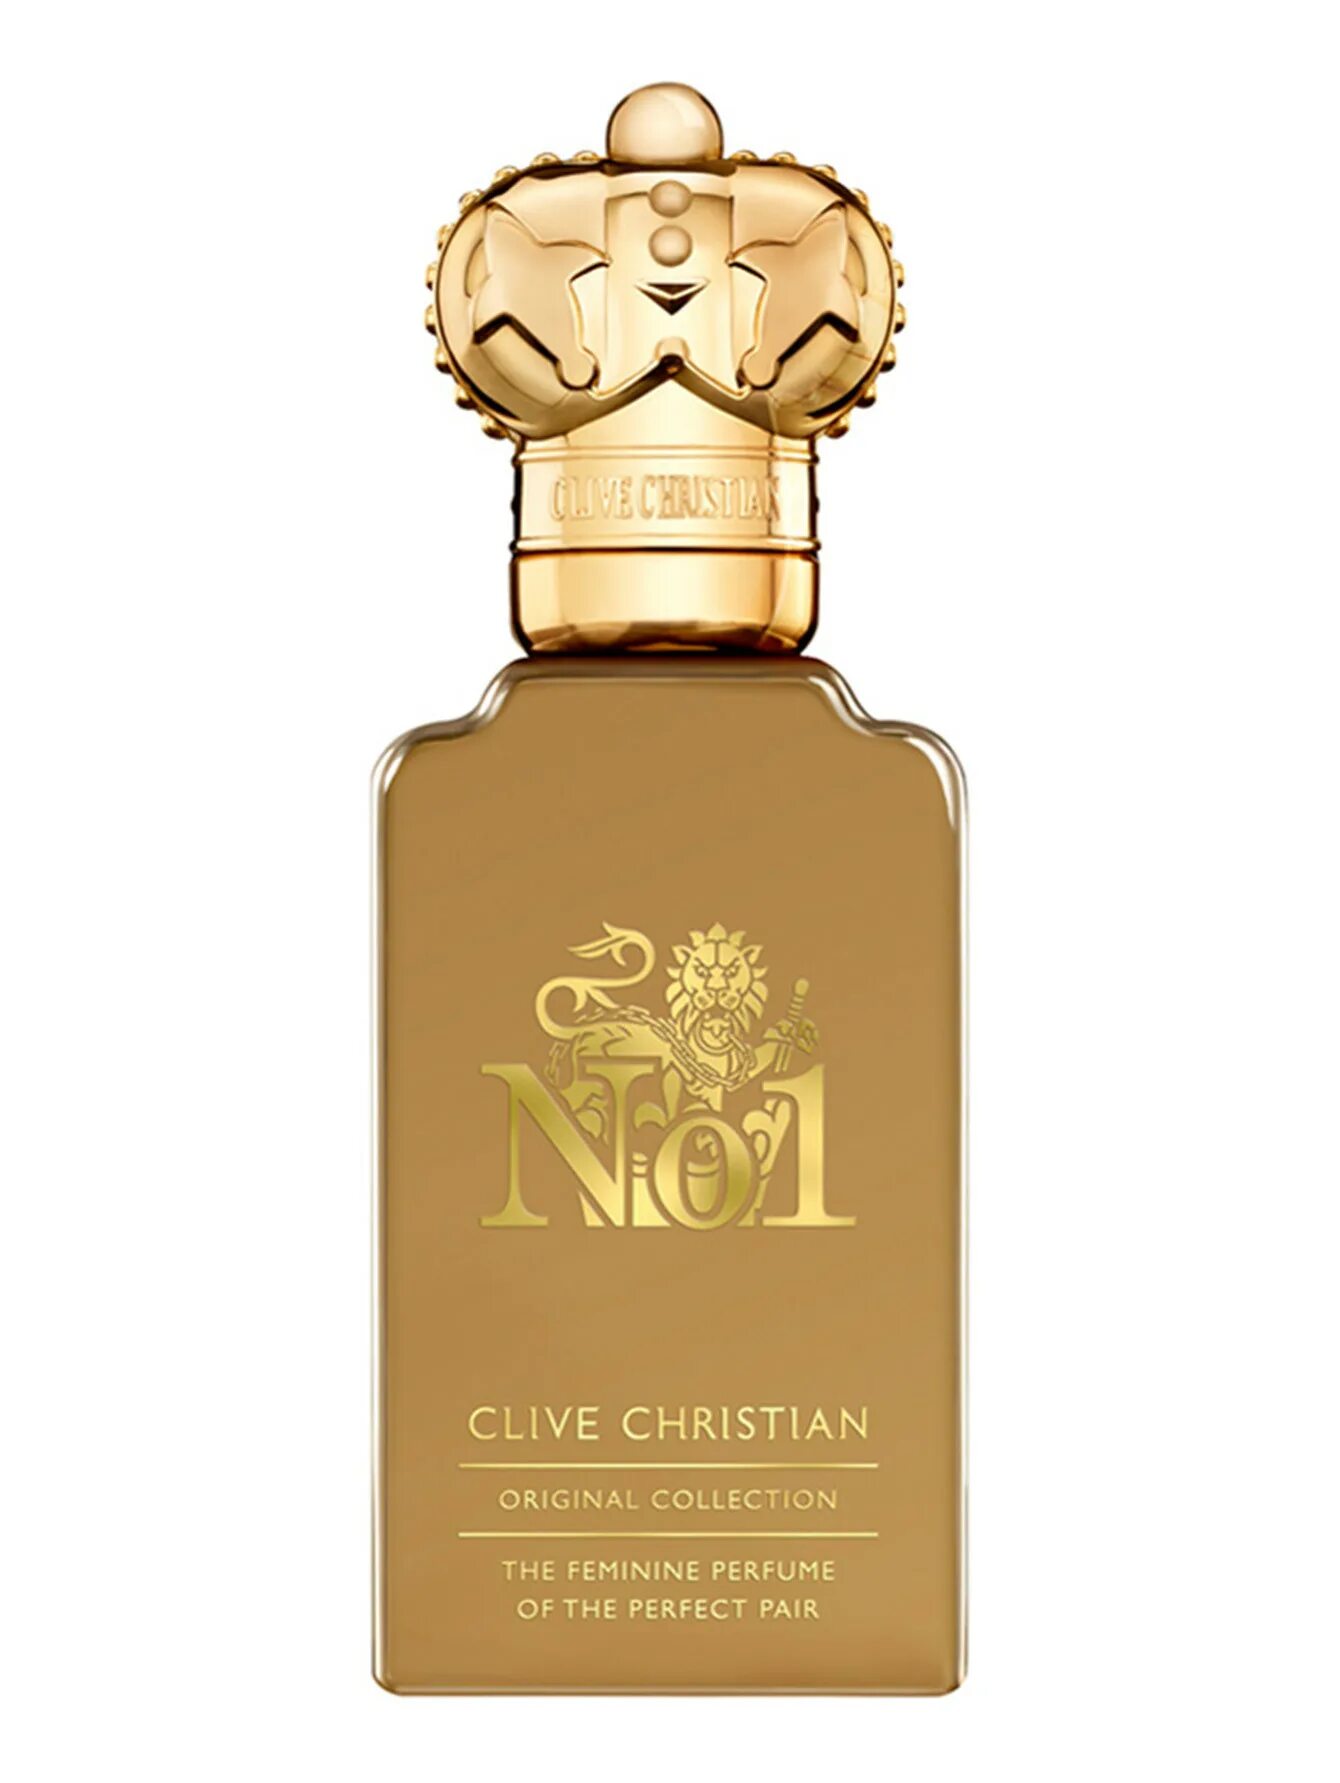 Clive Christian Perfume no.1 мужские. Clive Christian no духи. Clive Christian для туалетной воды № 1. Clive christian парфюм